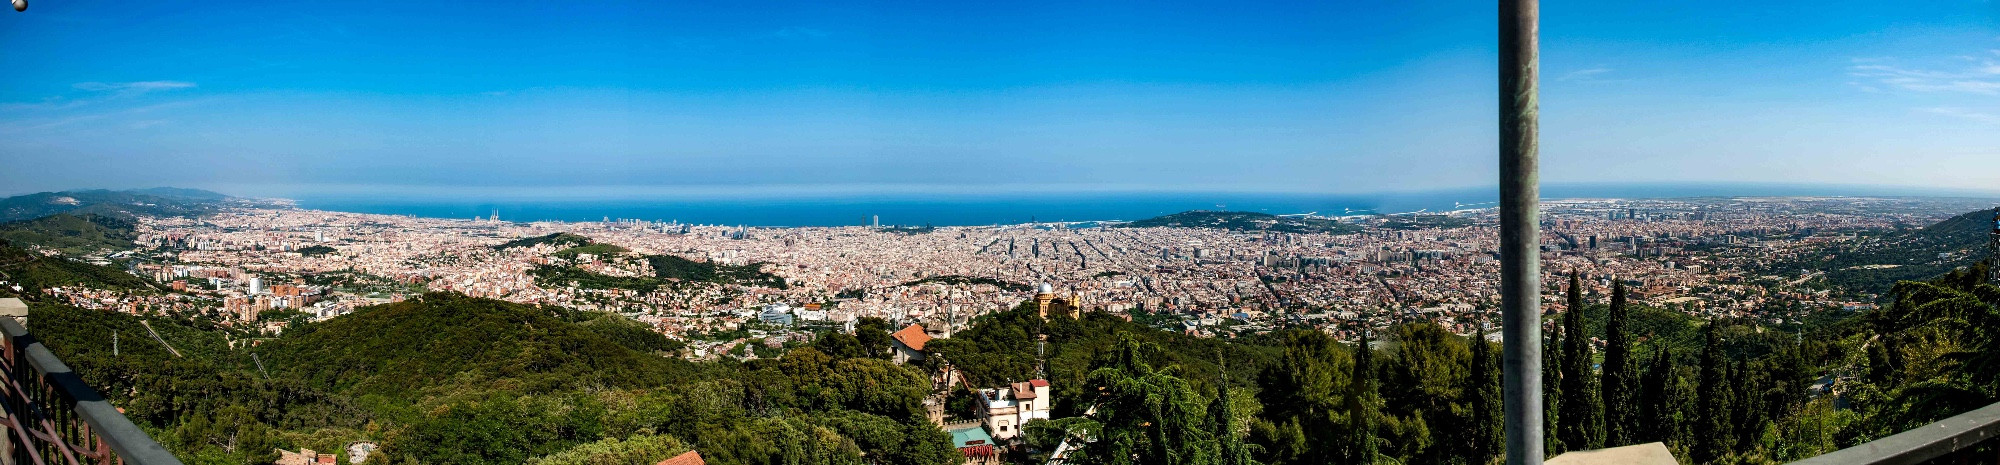 View on Barcelona